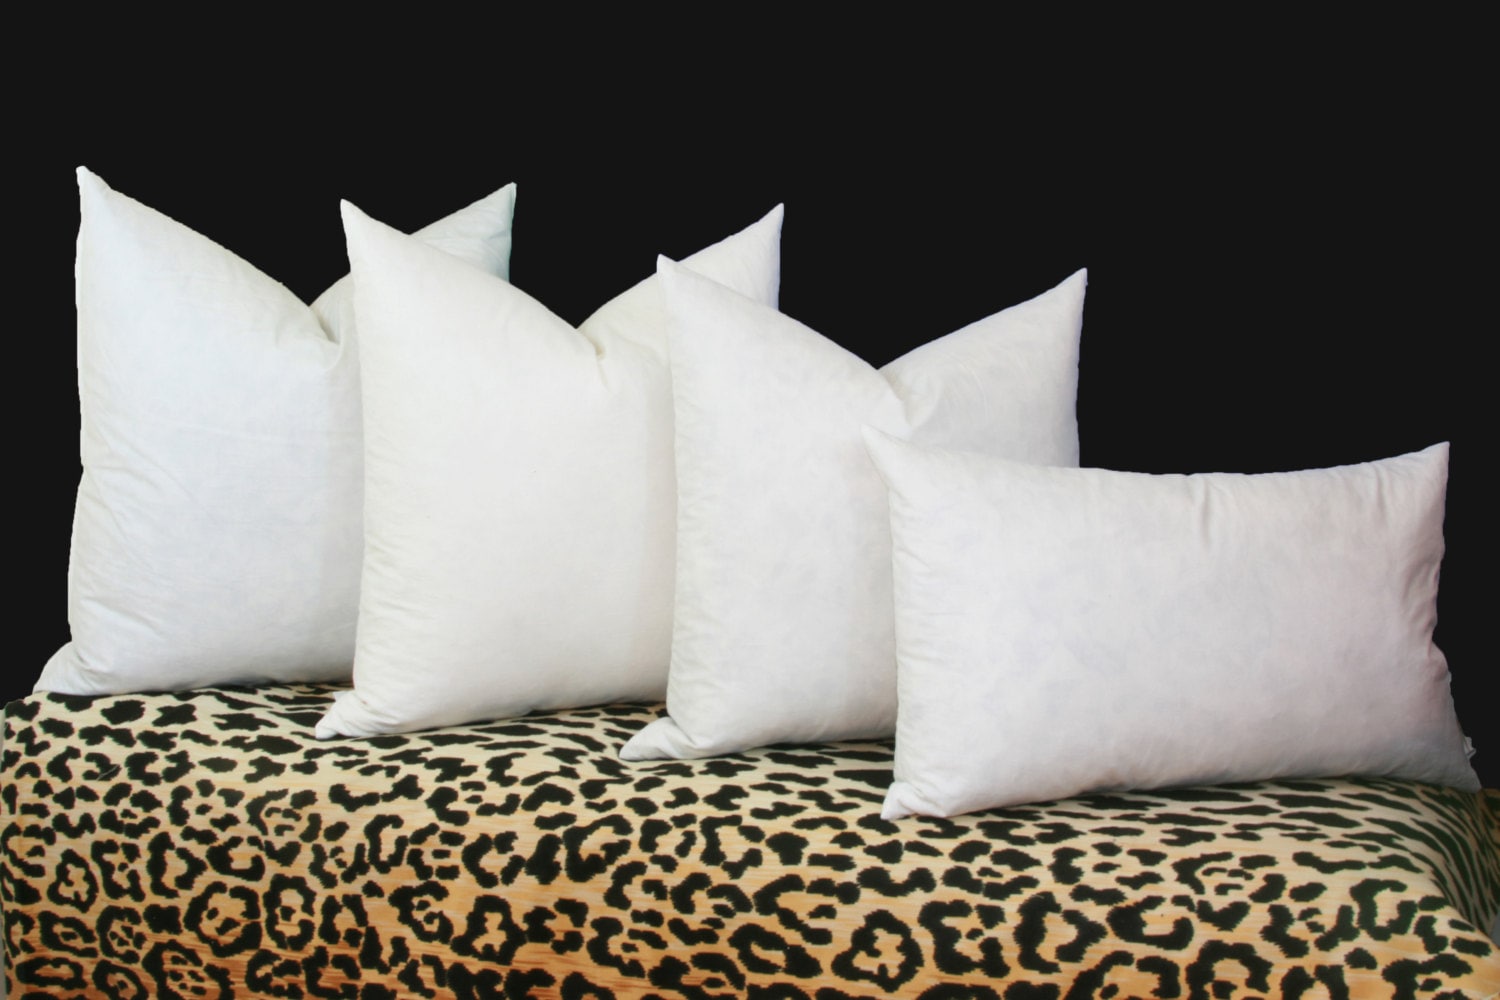 Outdoor Pillow Inserts 12x12 14x14 16x16 18x18 20x20 22x22 24x24 28x28 Outdoor  Pillow Form 12x16 Lumbar Pillow Insert Synthetic Pillow Form 